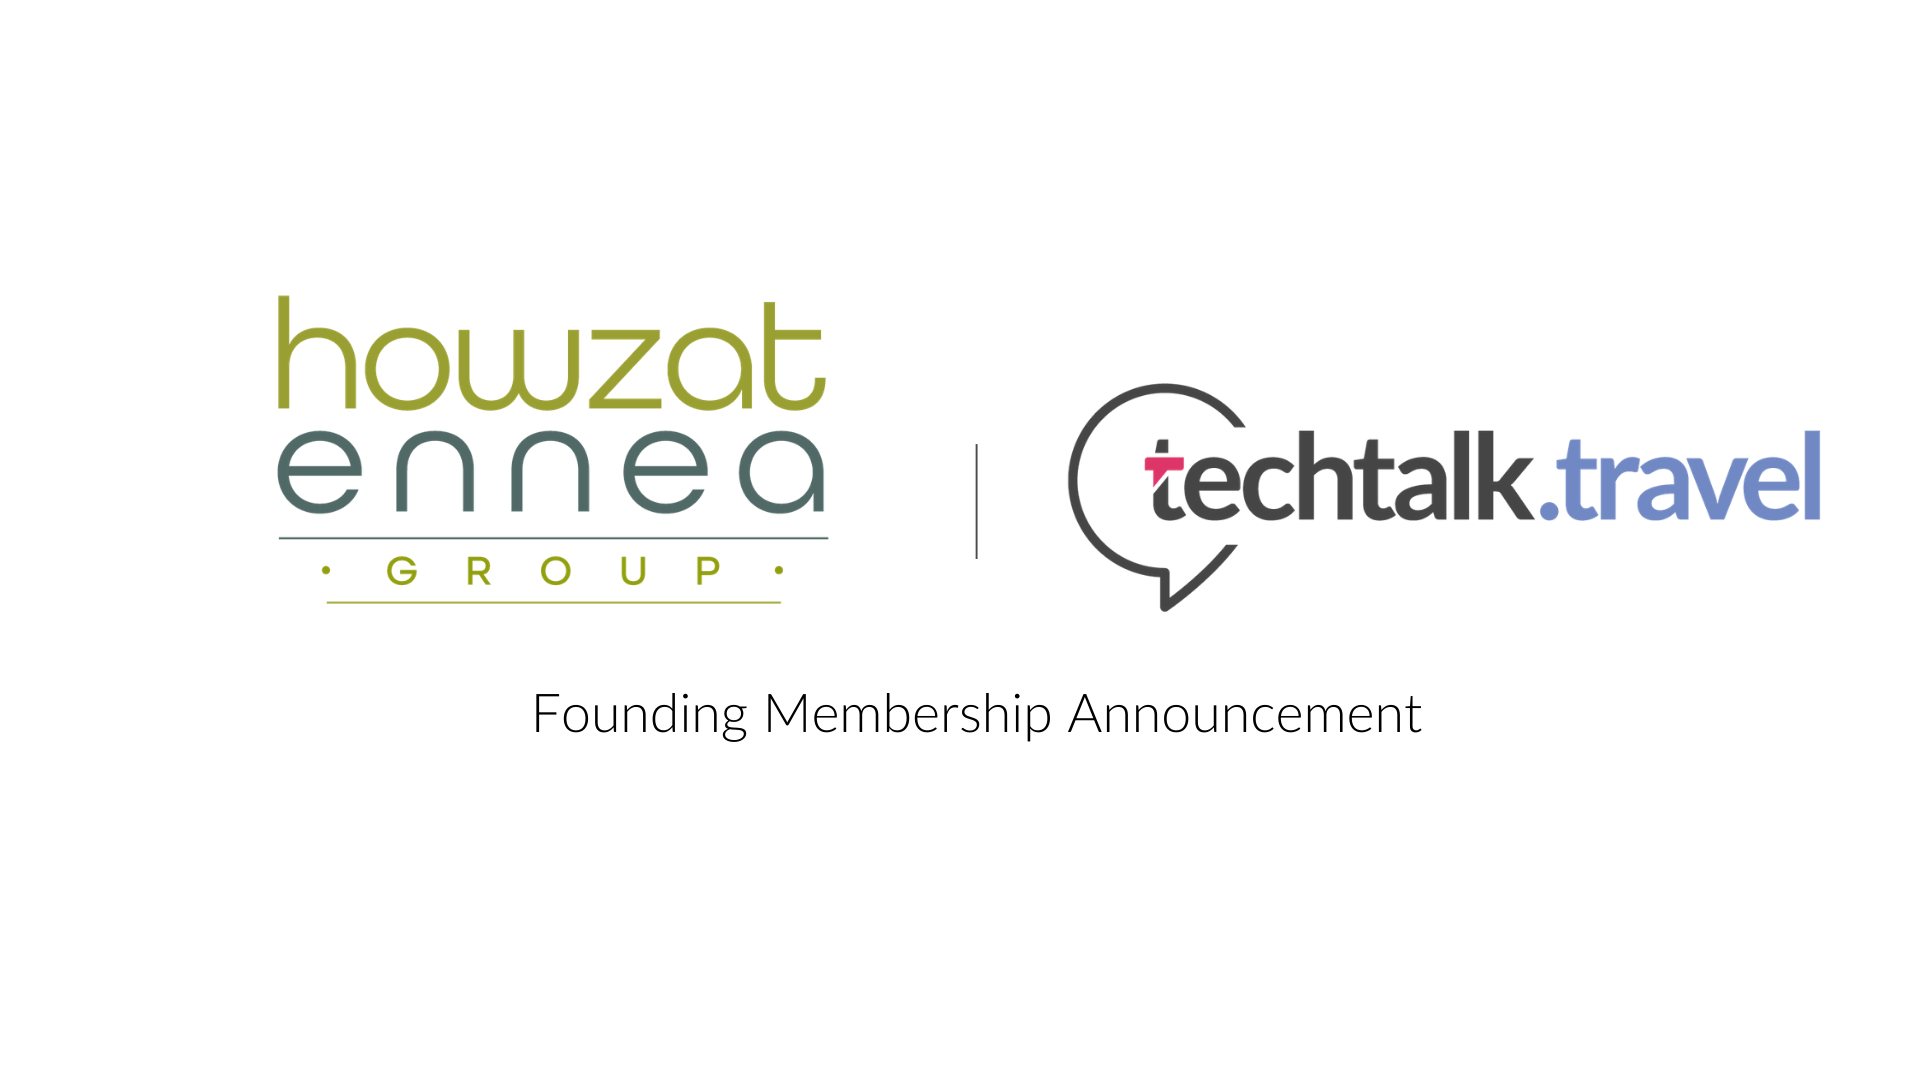 Founding Membership Announcement - HOWZAT ennea Group